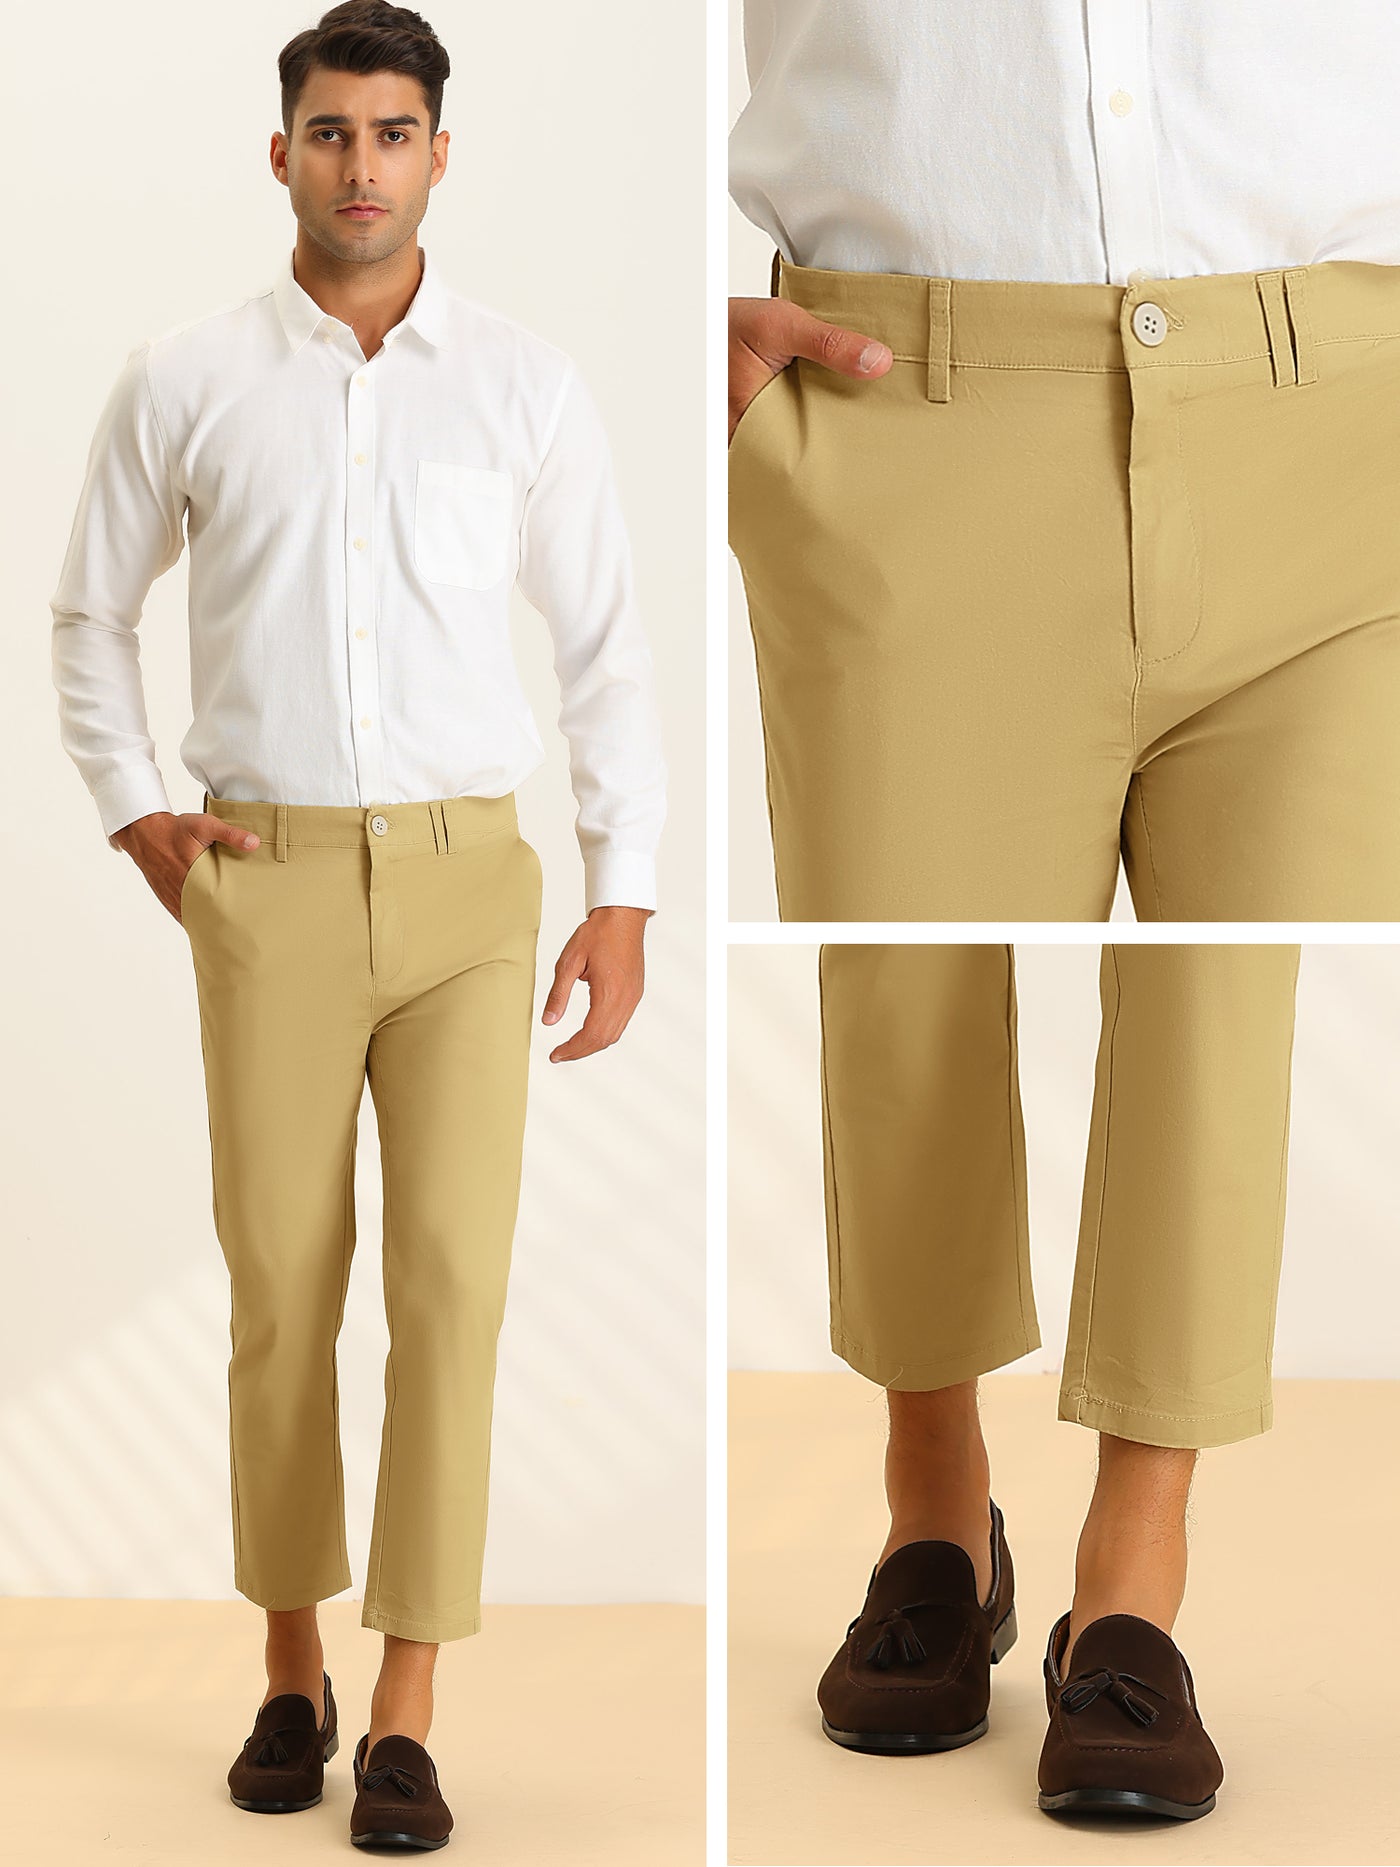 Bublédon Men's Business Cropped Slim Fit Flat Front Office Work Dress Pants